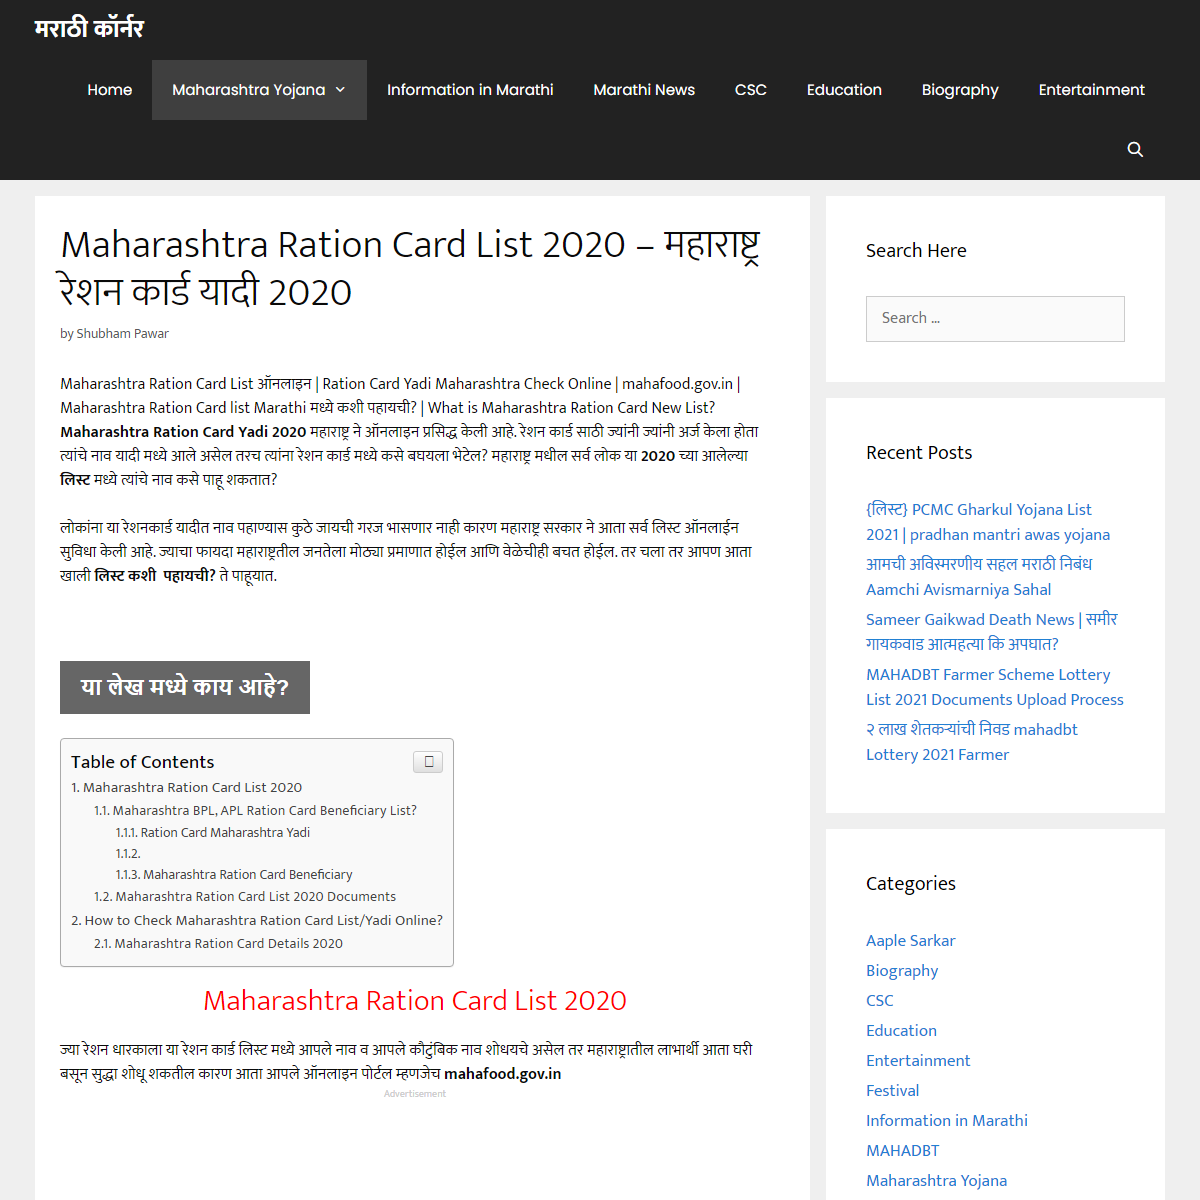 A complete backup of https://marathicorner.com/maharashtra-ration-card-list.html